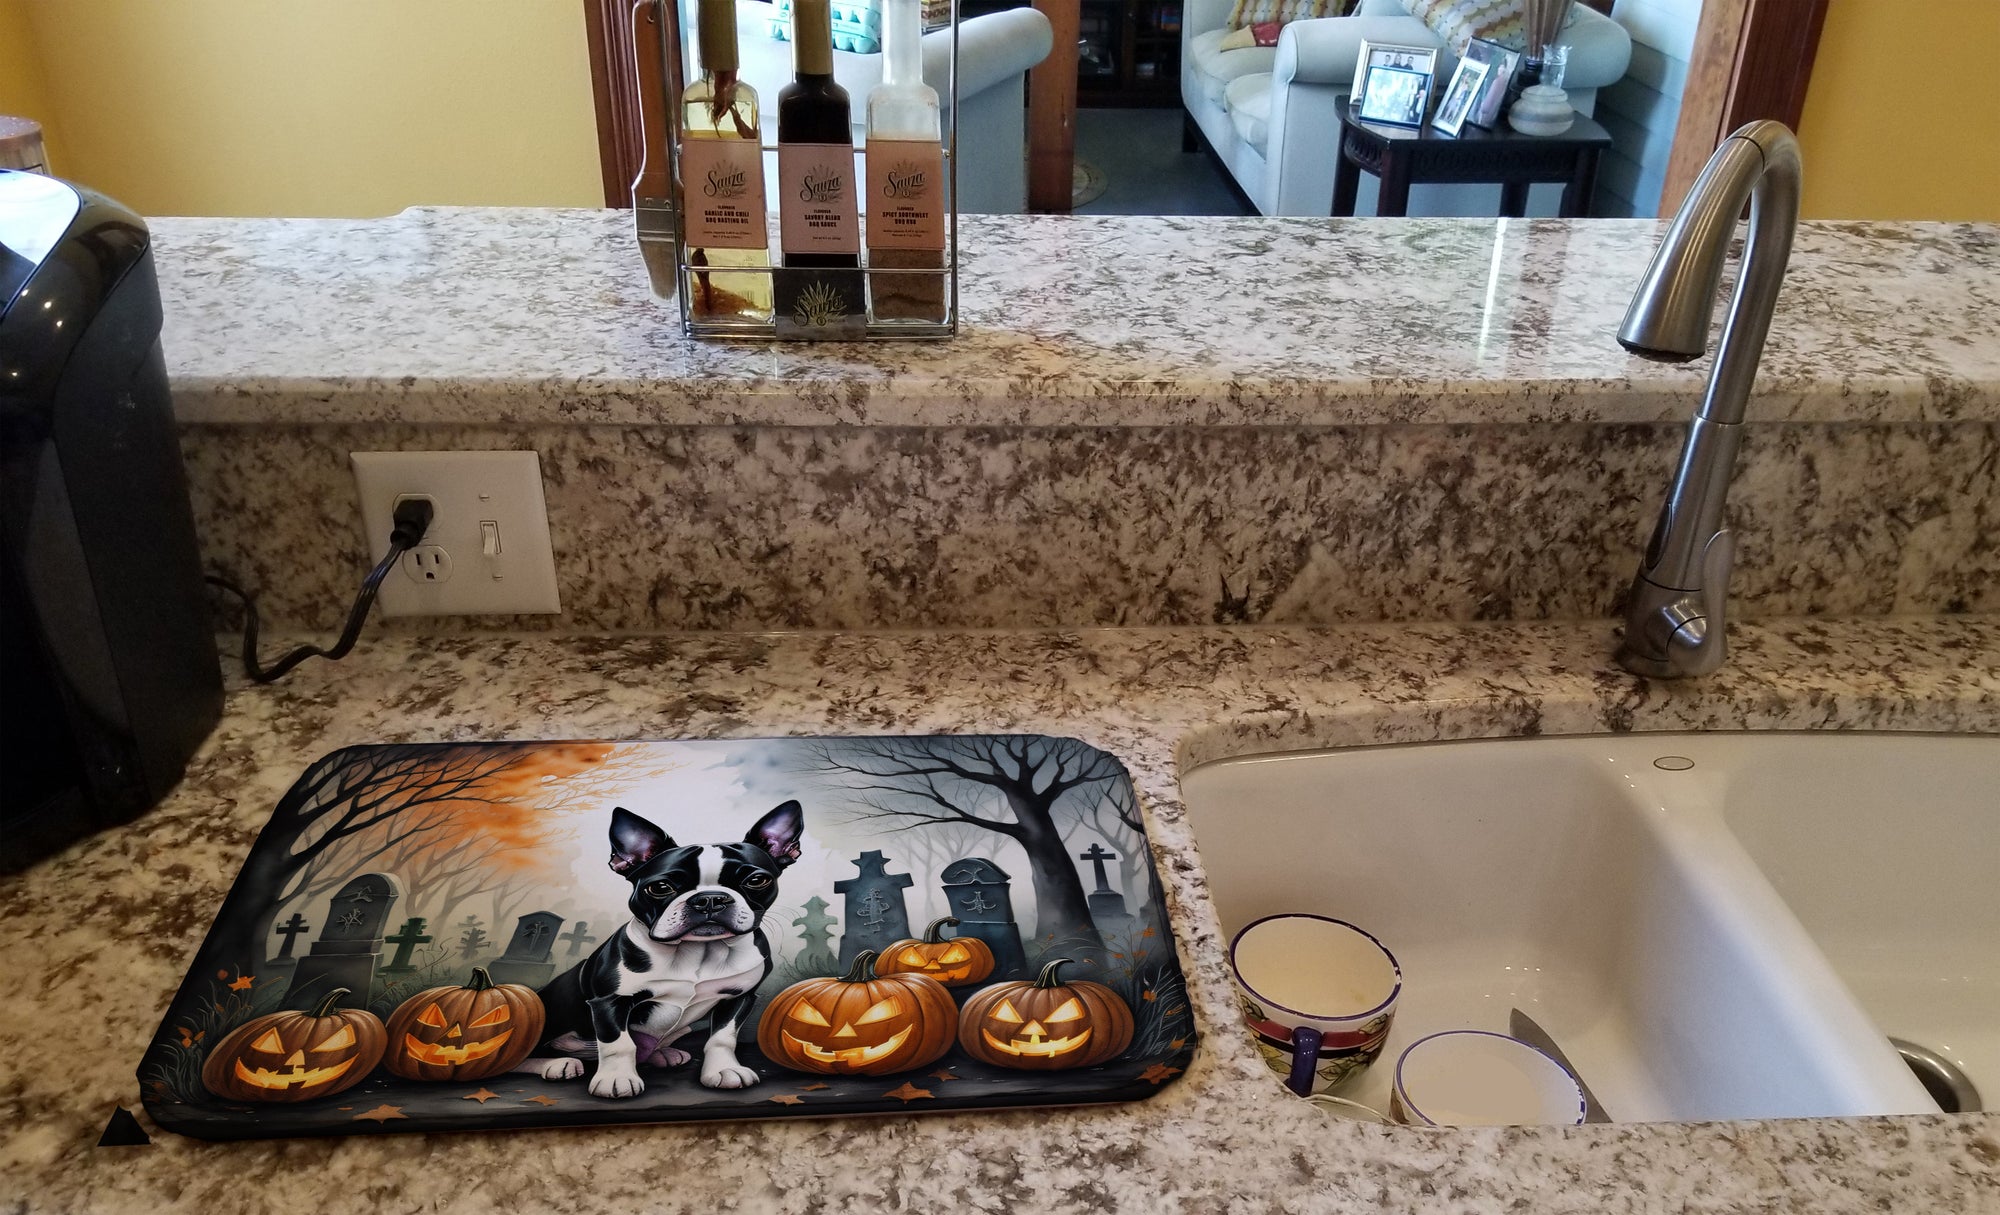 Buy this Boston Terrier Spooky Halloween Dish Drying Mat